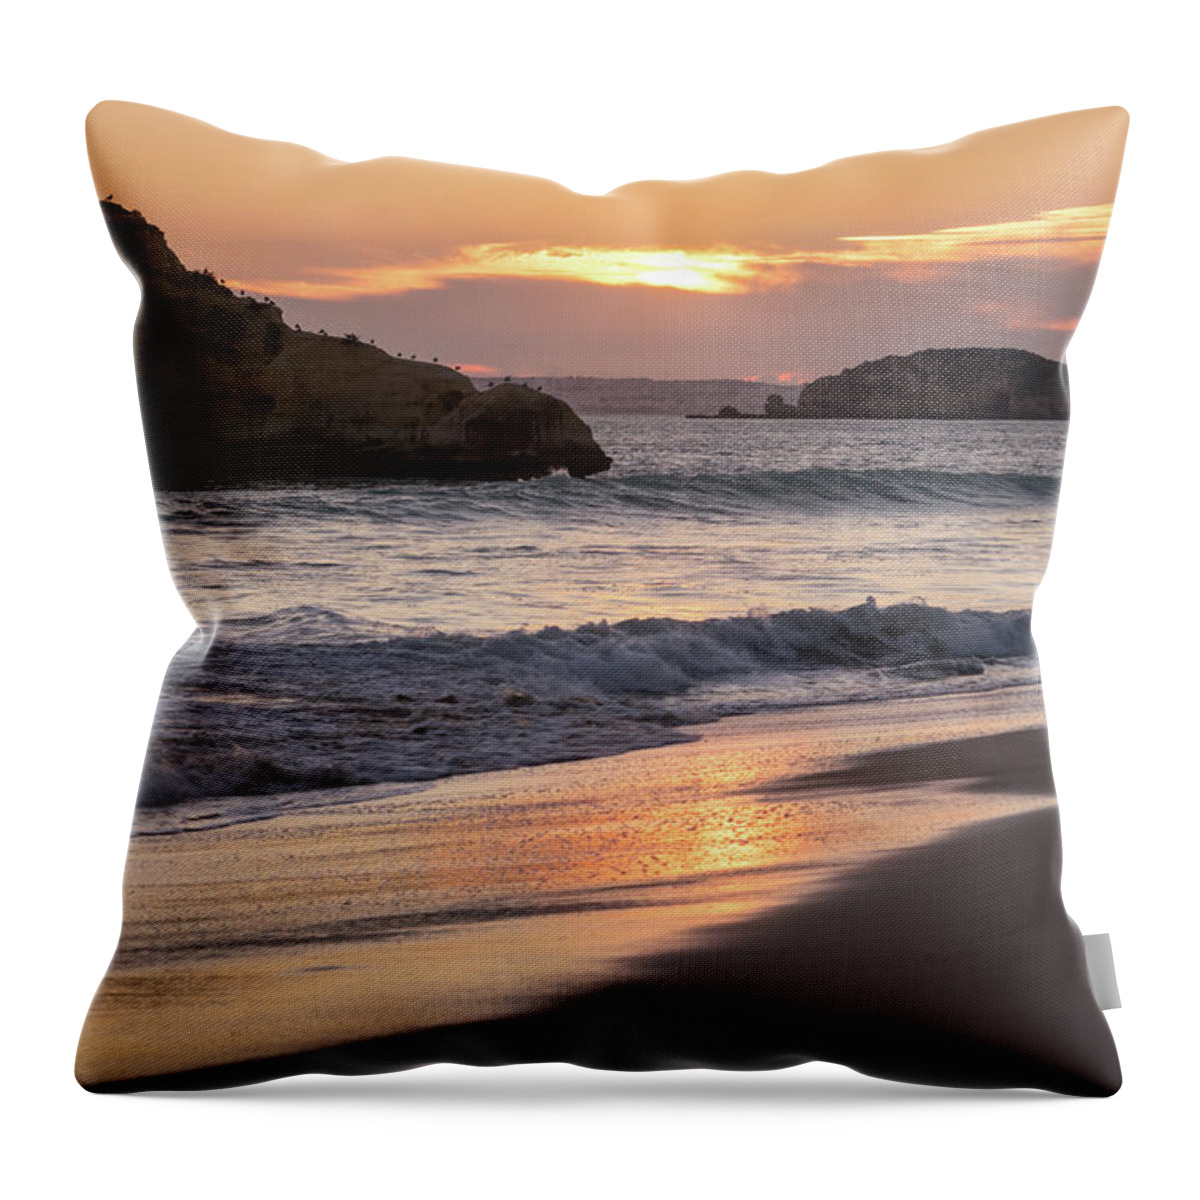 Slow Sunset Throw Pillow featuring the photograph Slow Sunset on the Beach by Georgia Mizuleva